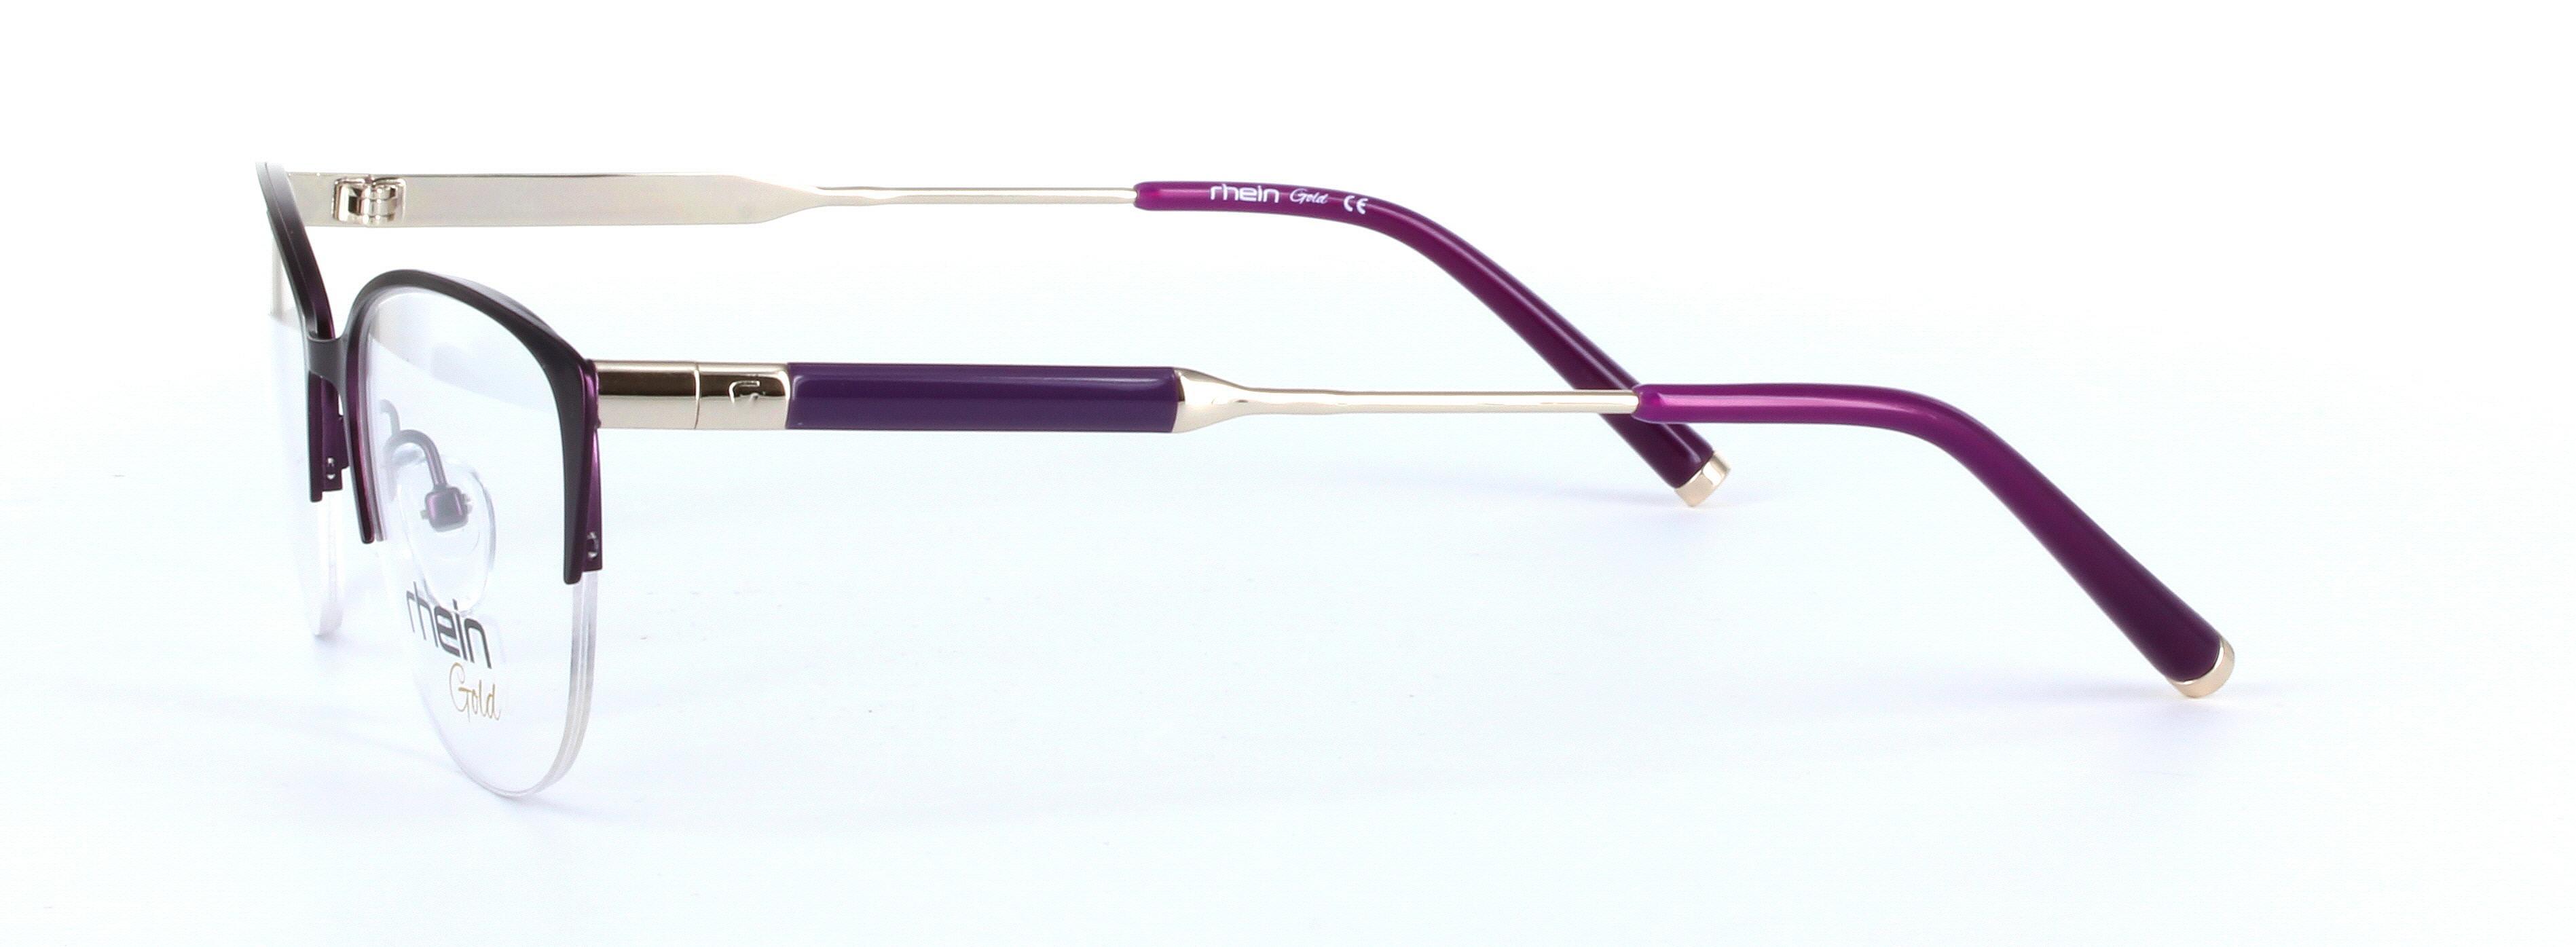 Emily Purple Semi Rimless Oval Metal Glasses - Image View 2